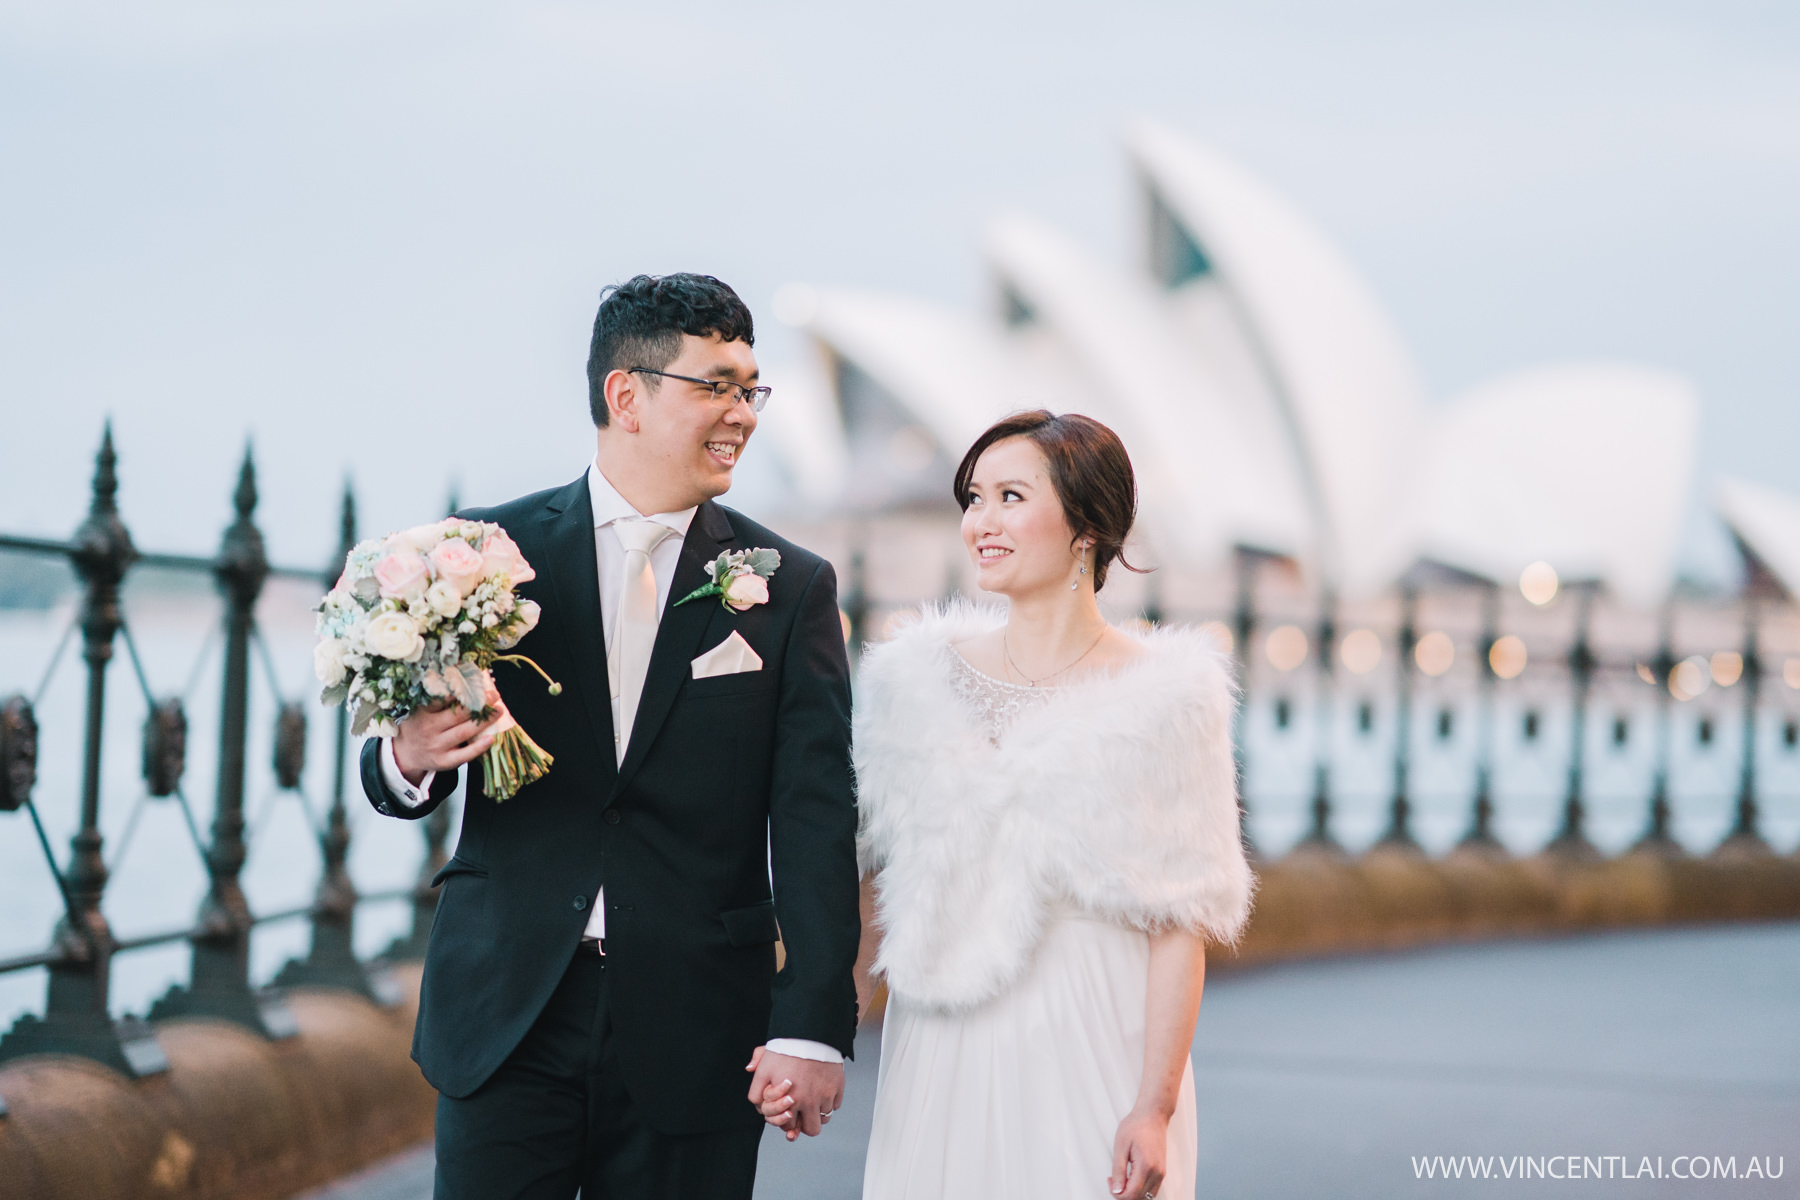 Vincent Lai Sydney Award Winning Wedding Photographer